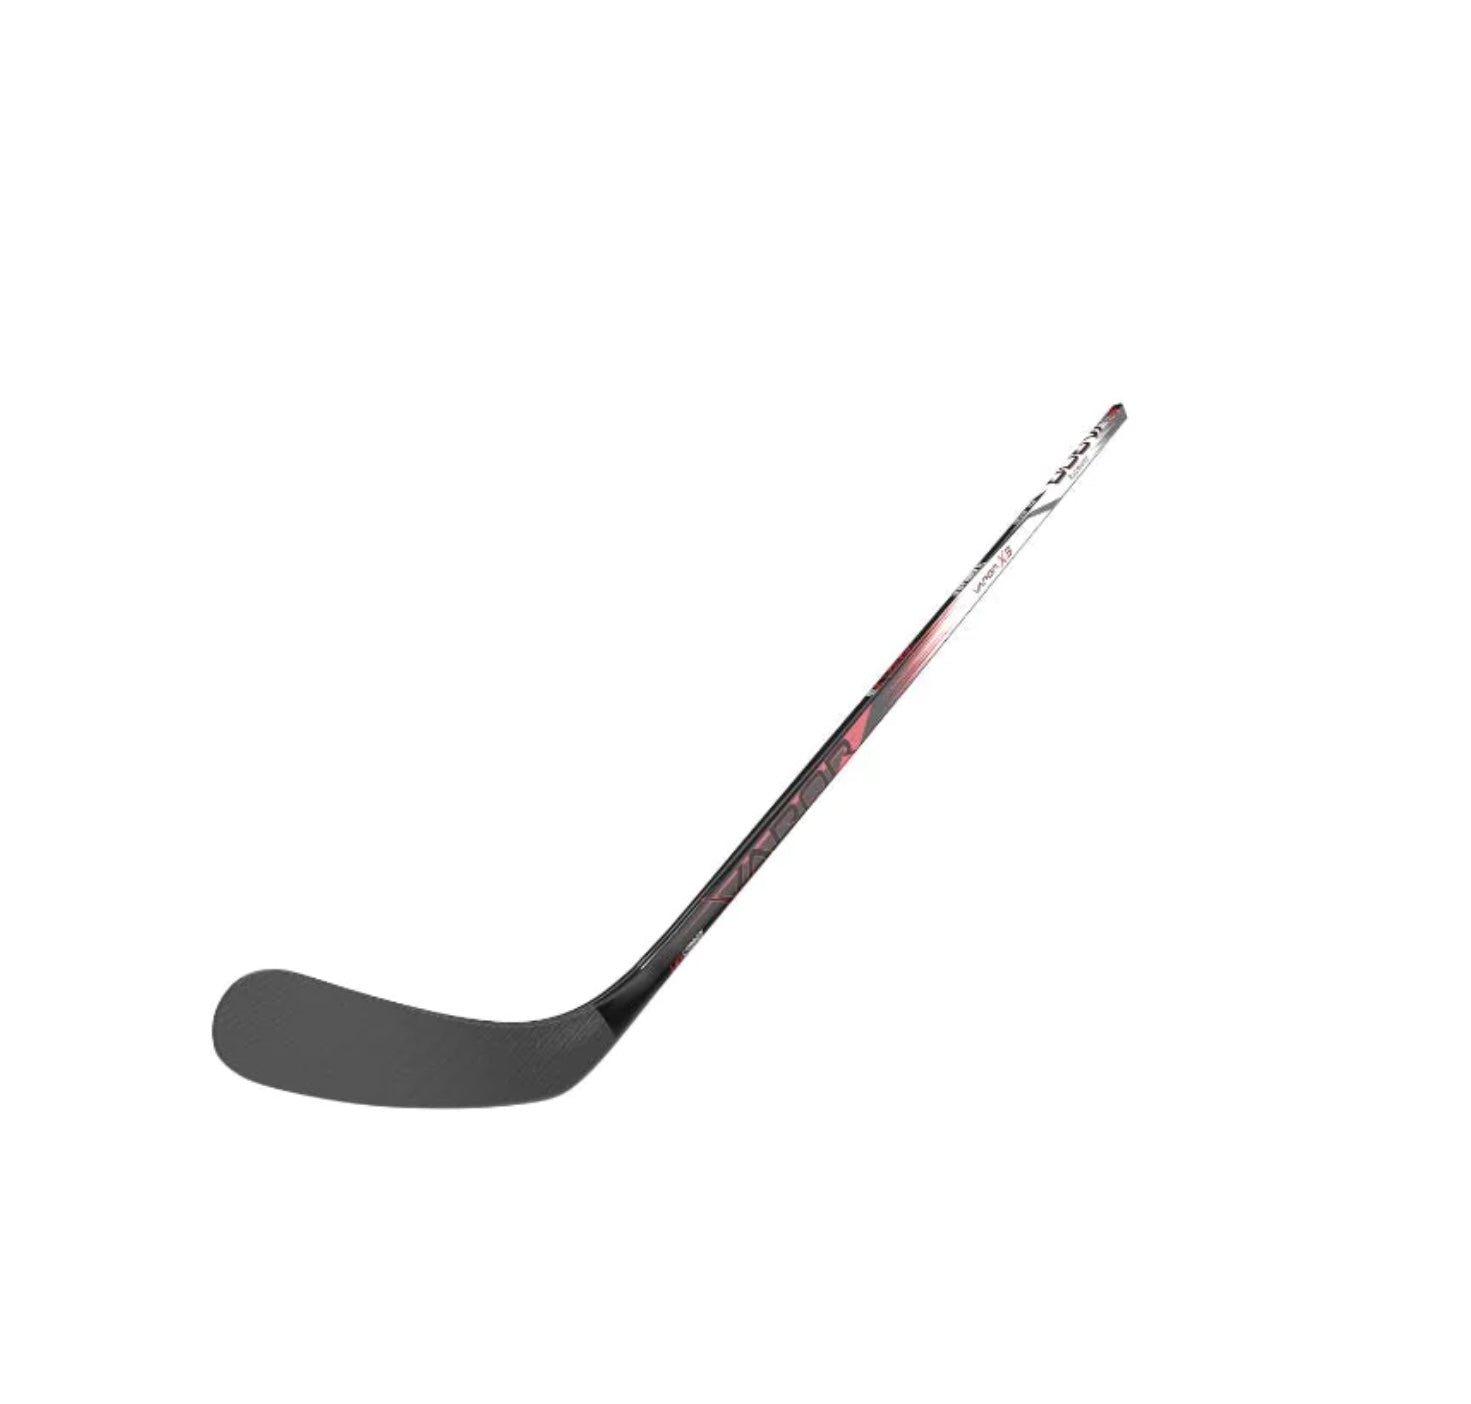 Bauer X3 Ice Hockey Stick